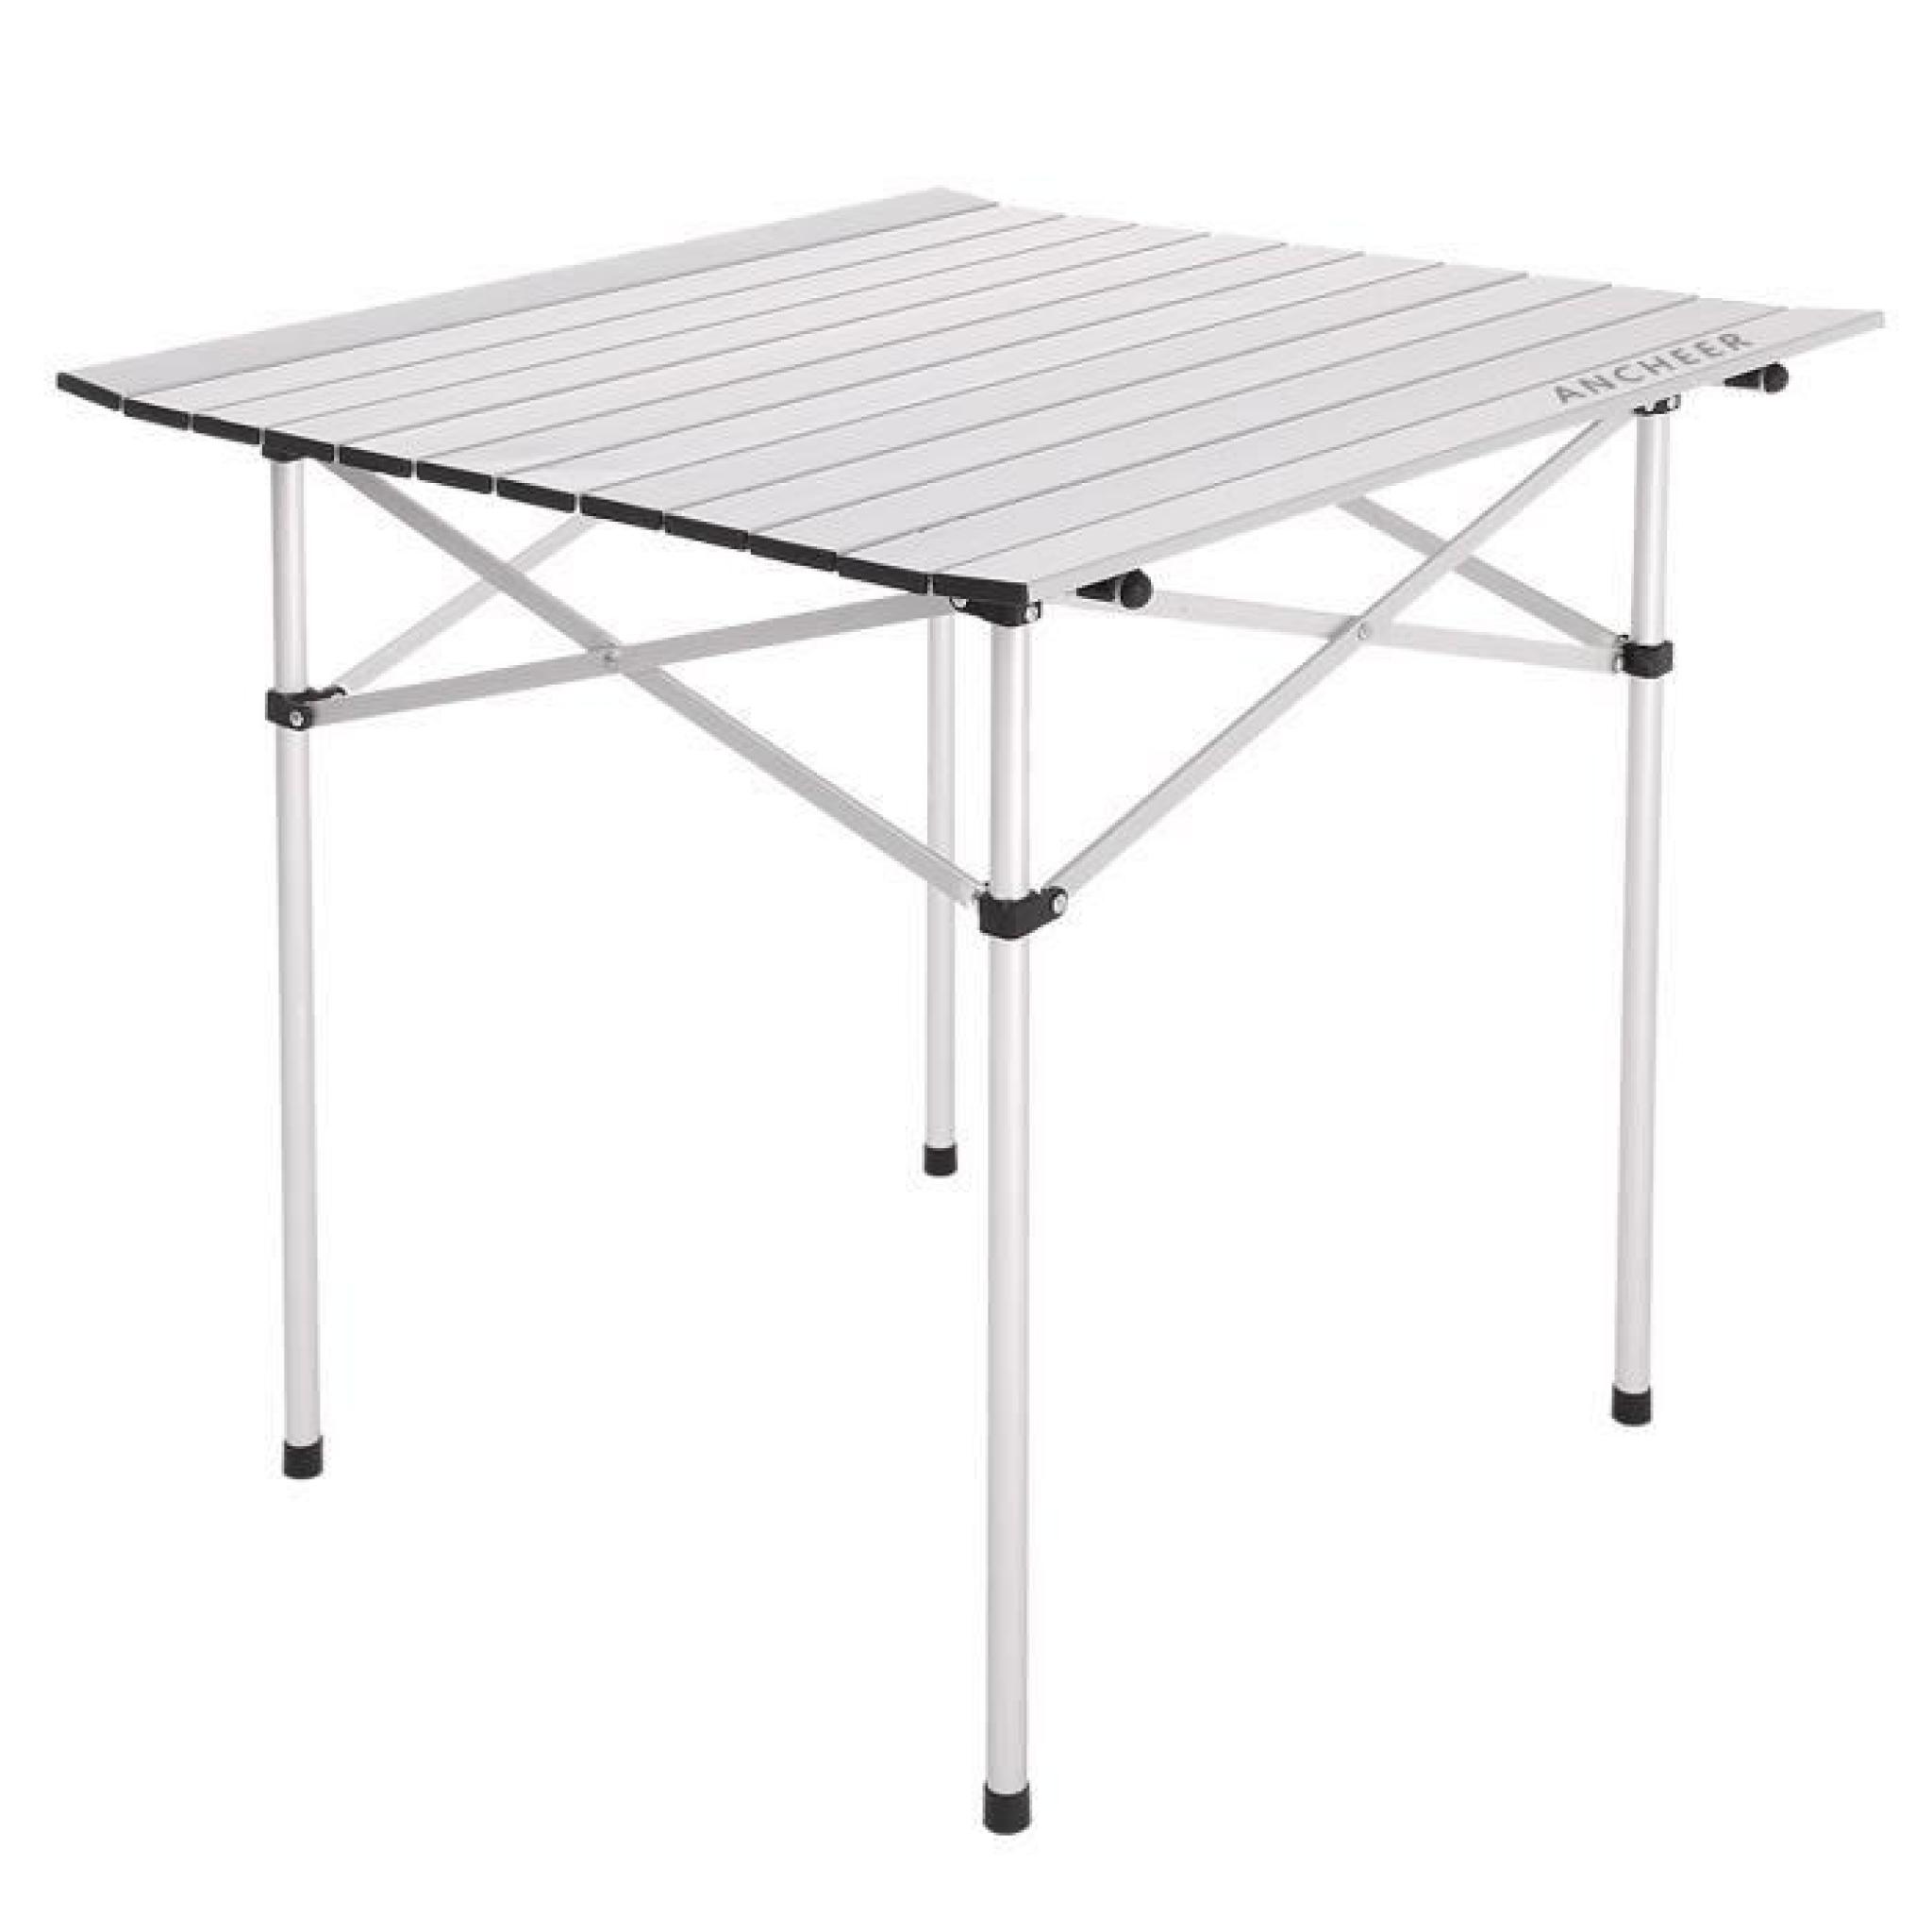 Nouvelle Ancheer table de jardin Portable aluminium retrousser Table pliante Camping pique-nique 